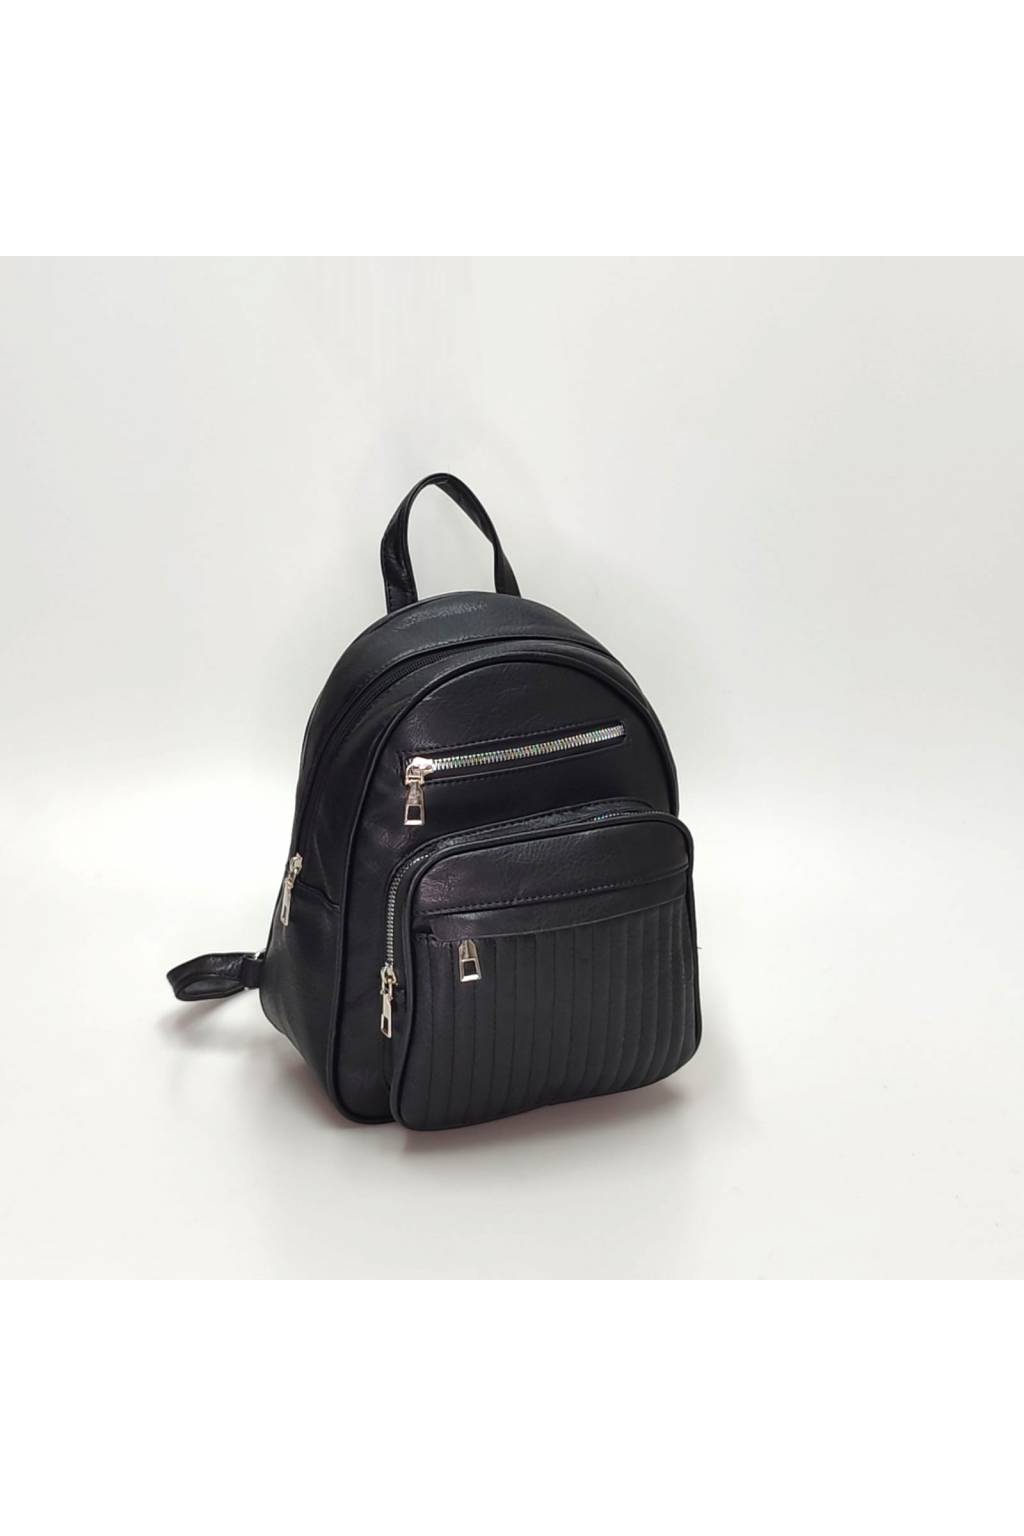 Dámsky ruksak DL0185 čierny www.kabelky vypredaj (10)